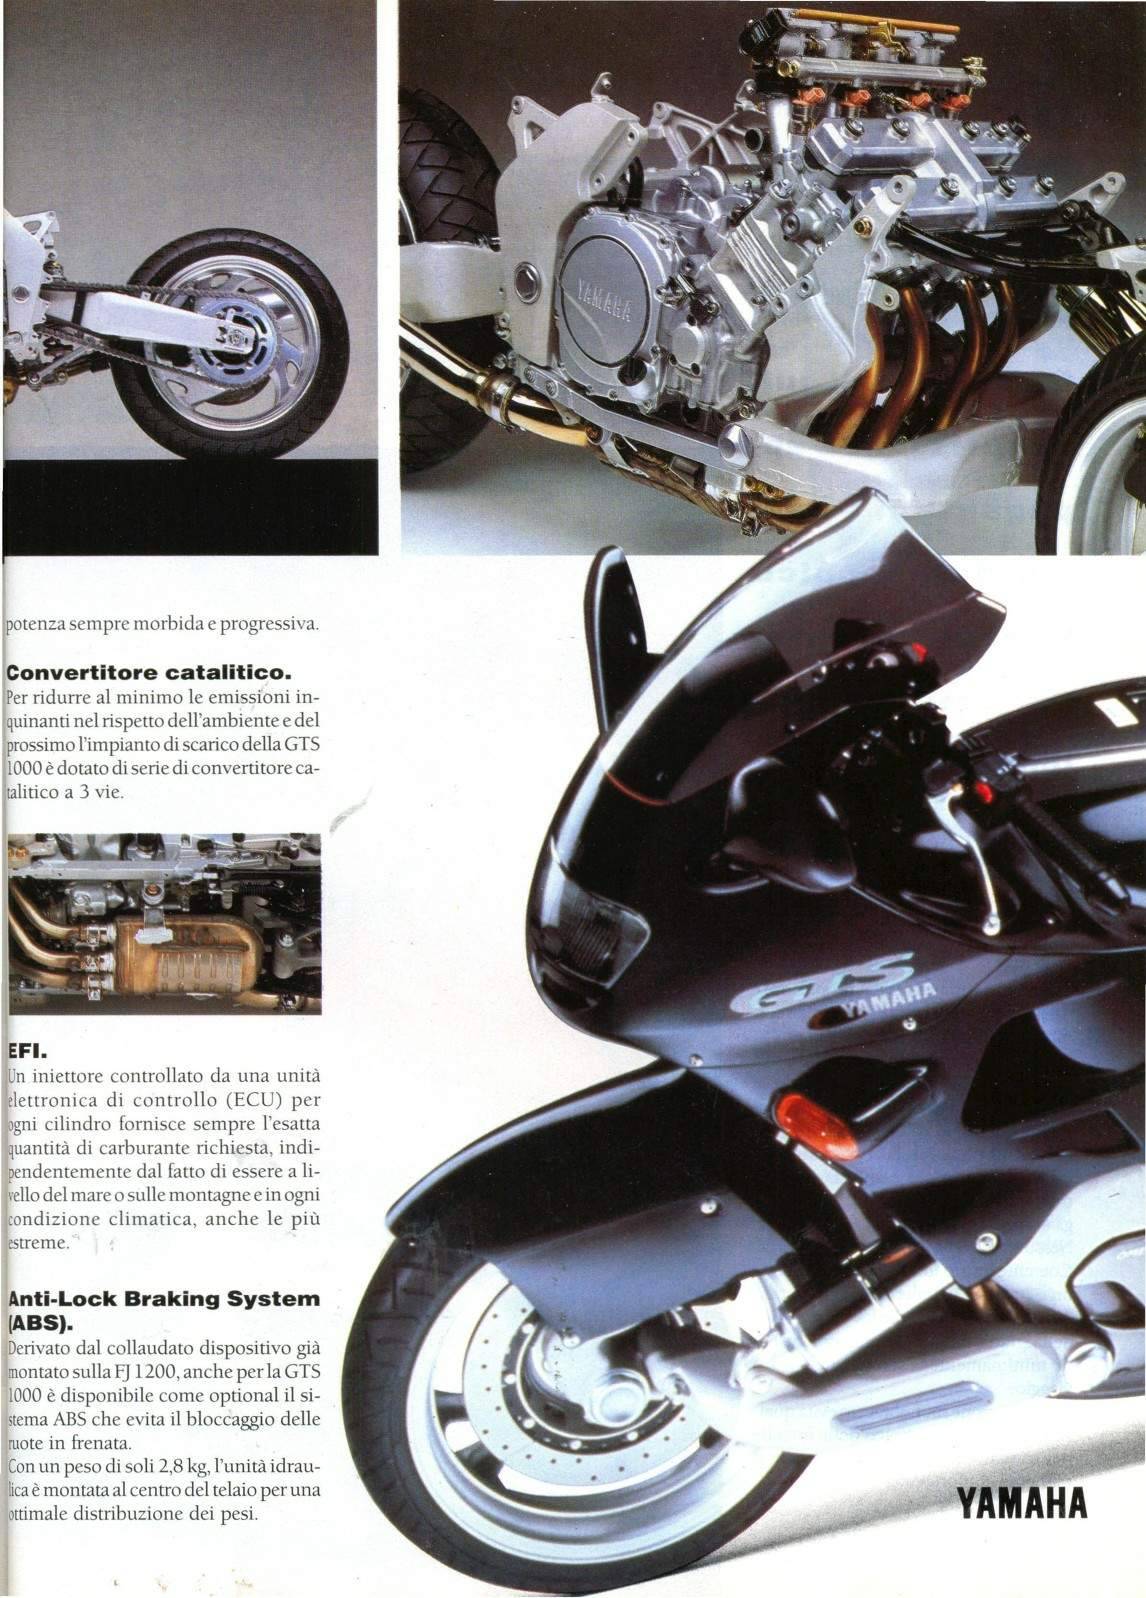 Yamaha gts1000: review, history, specs - bikeswiki.com, japanese motorcycle encyclopedia